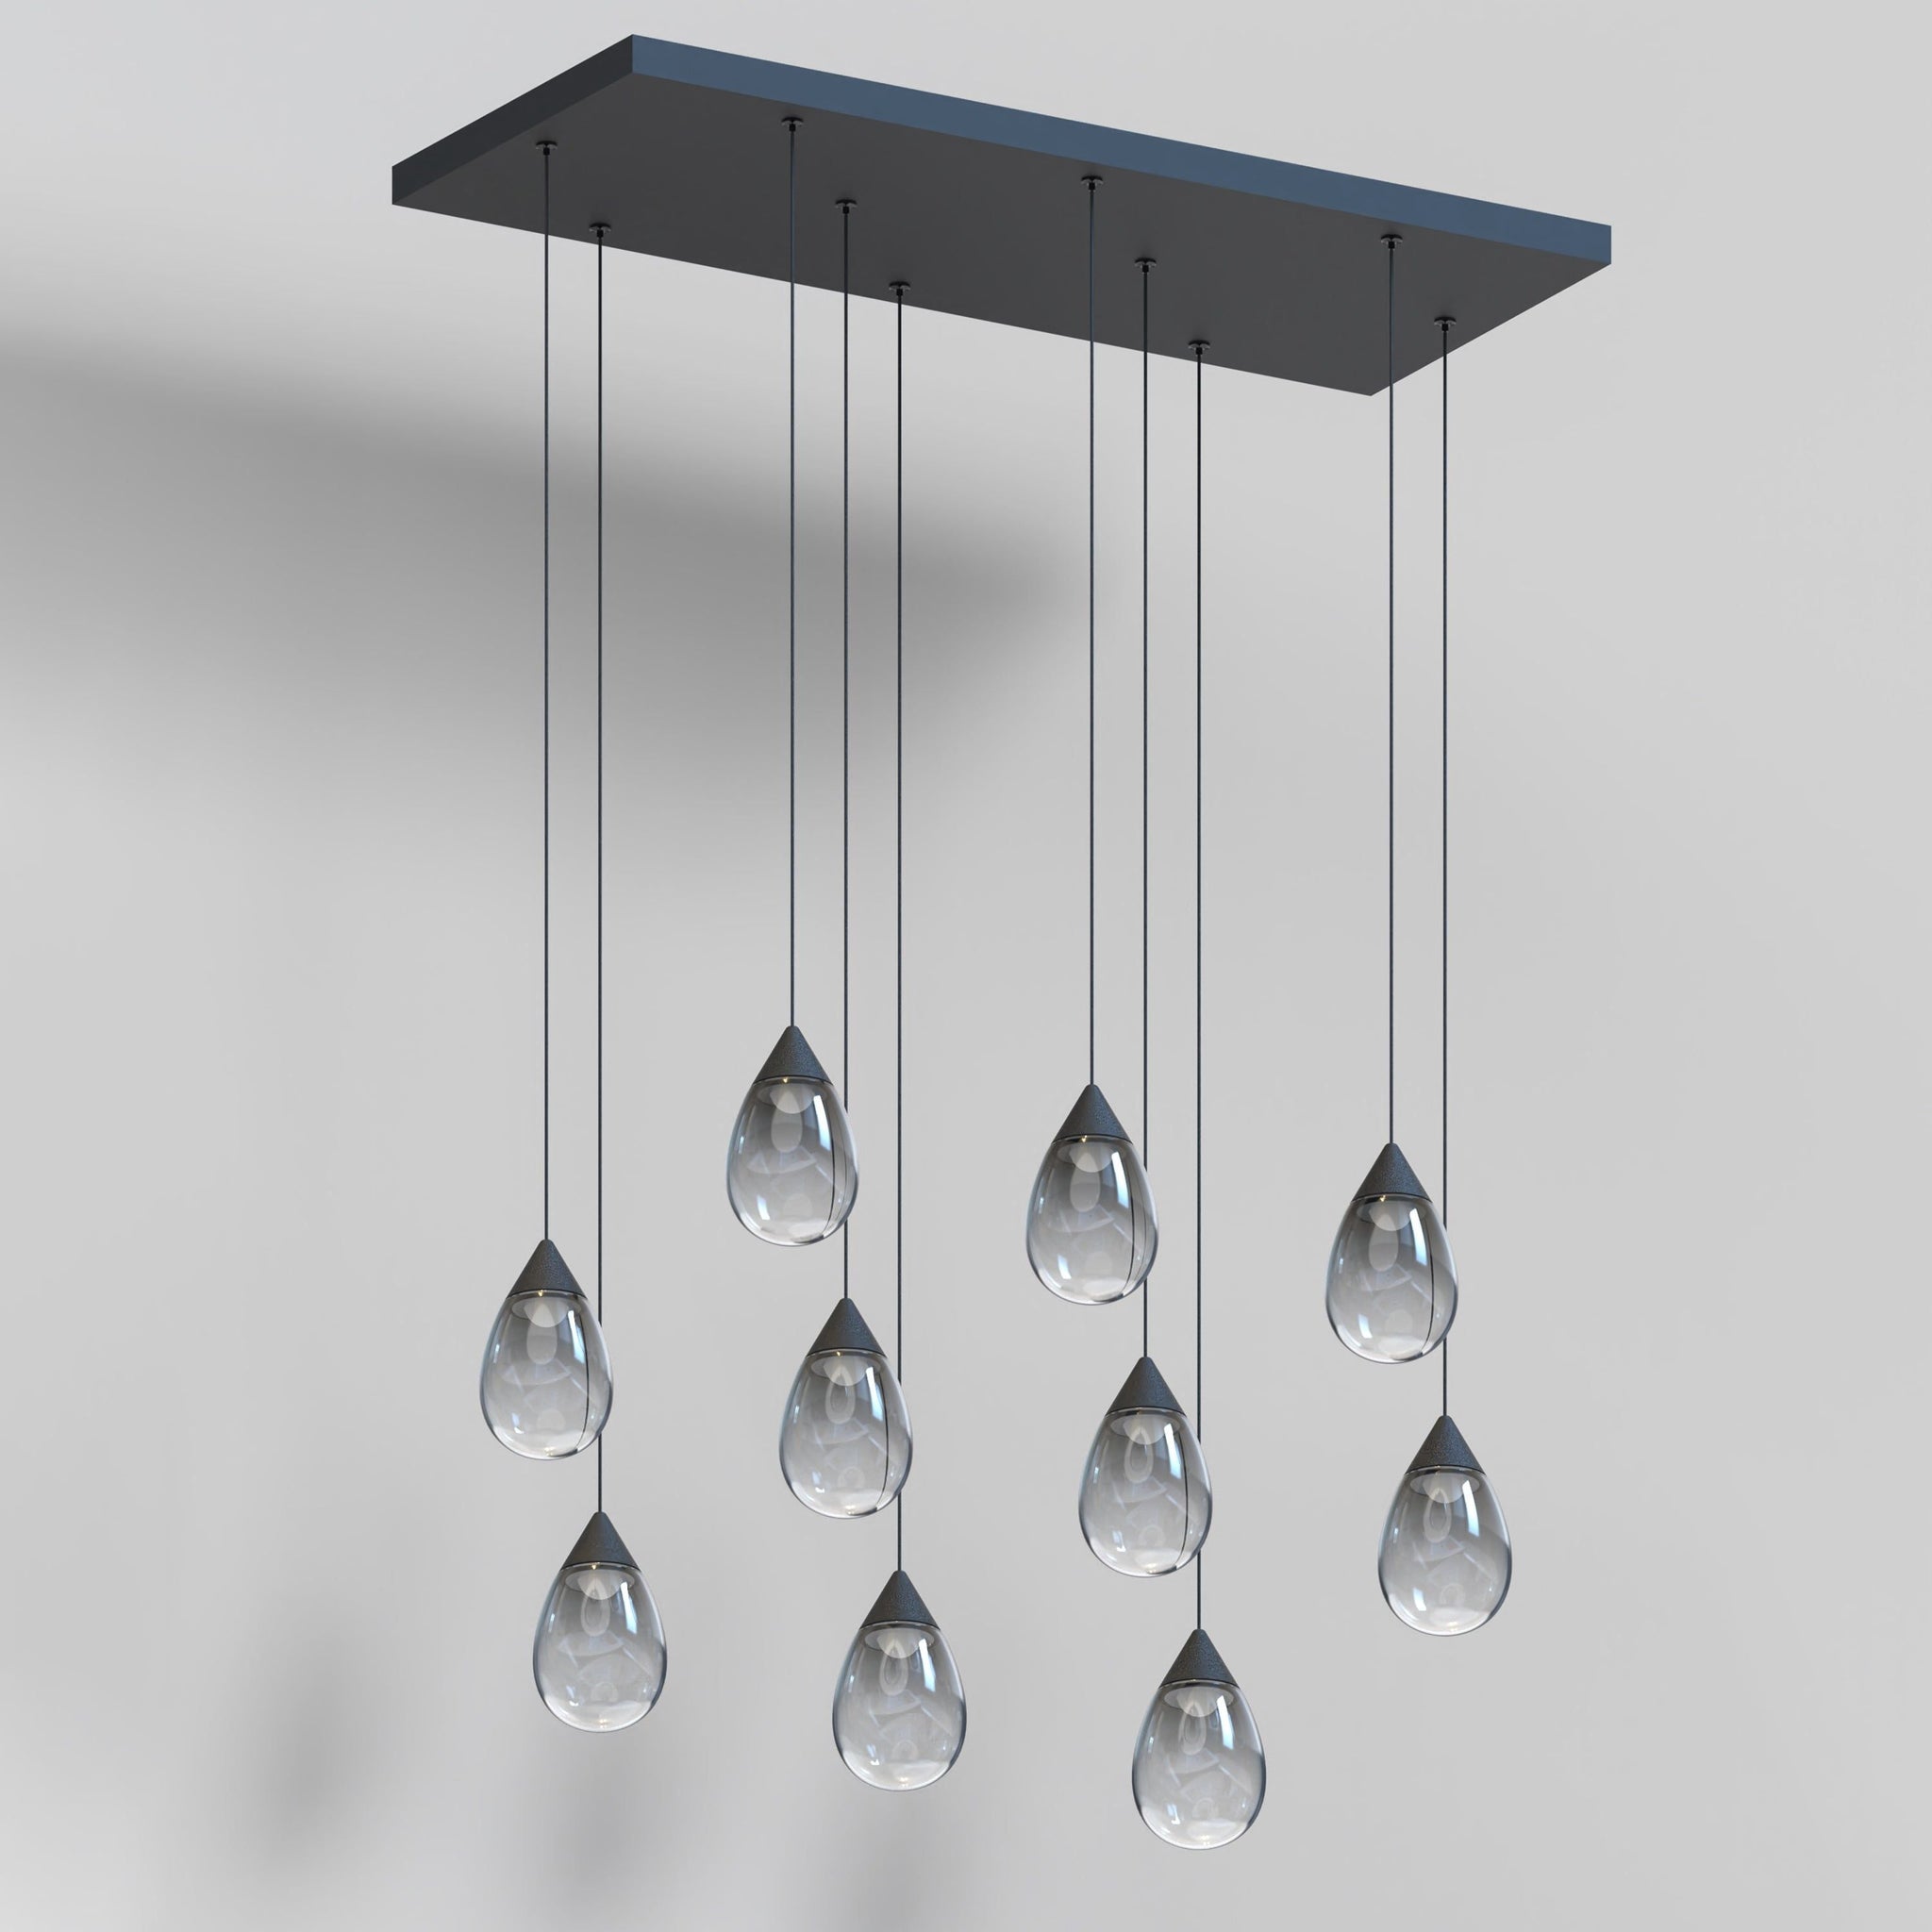 Dewdrop 10-Light LED Linear Pendant